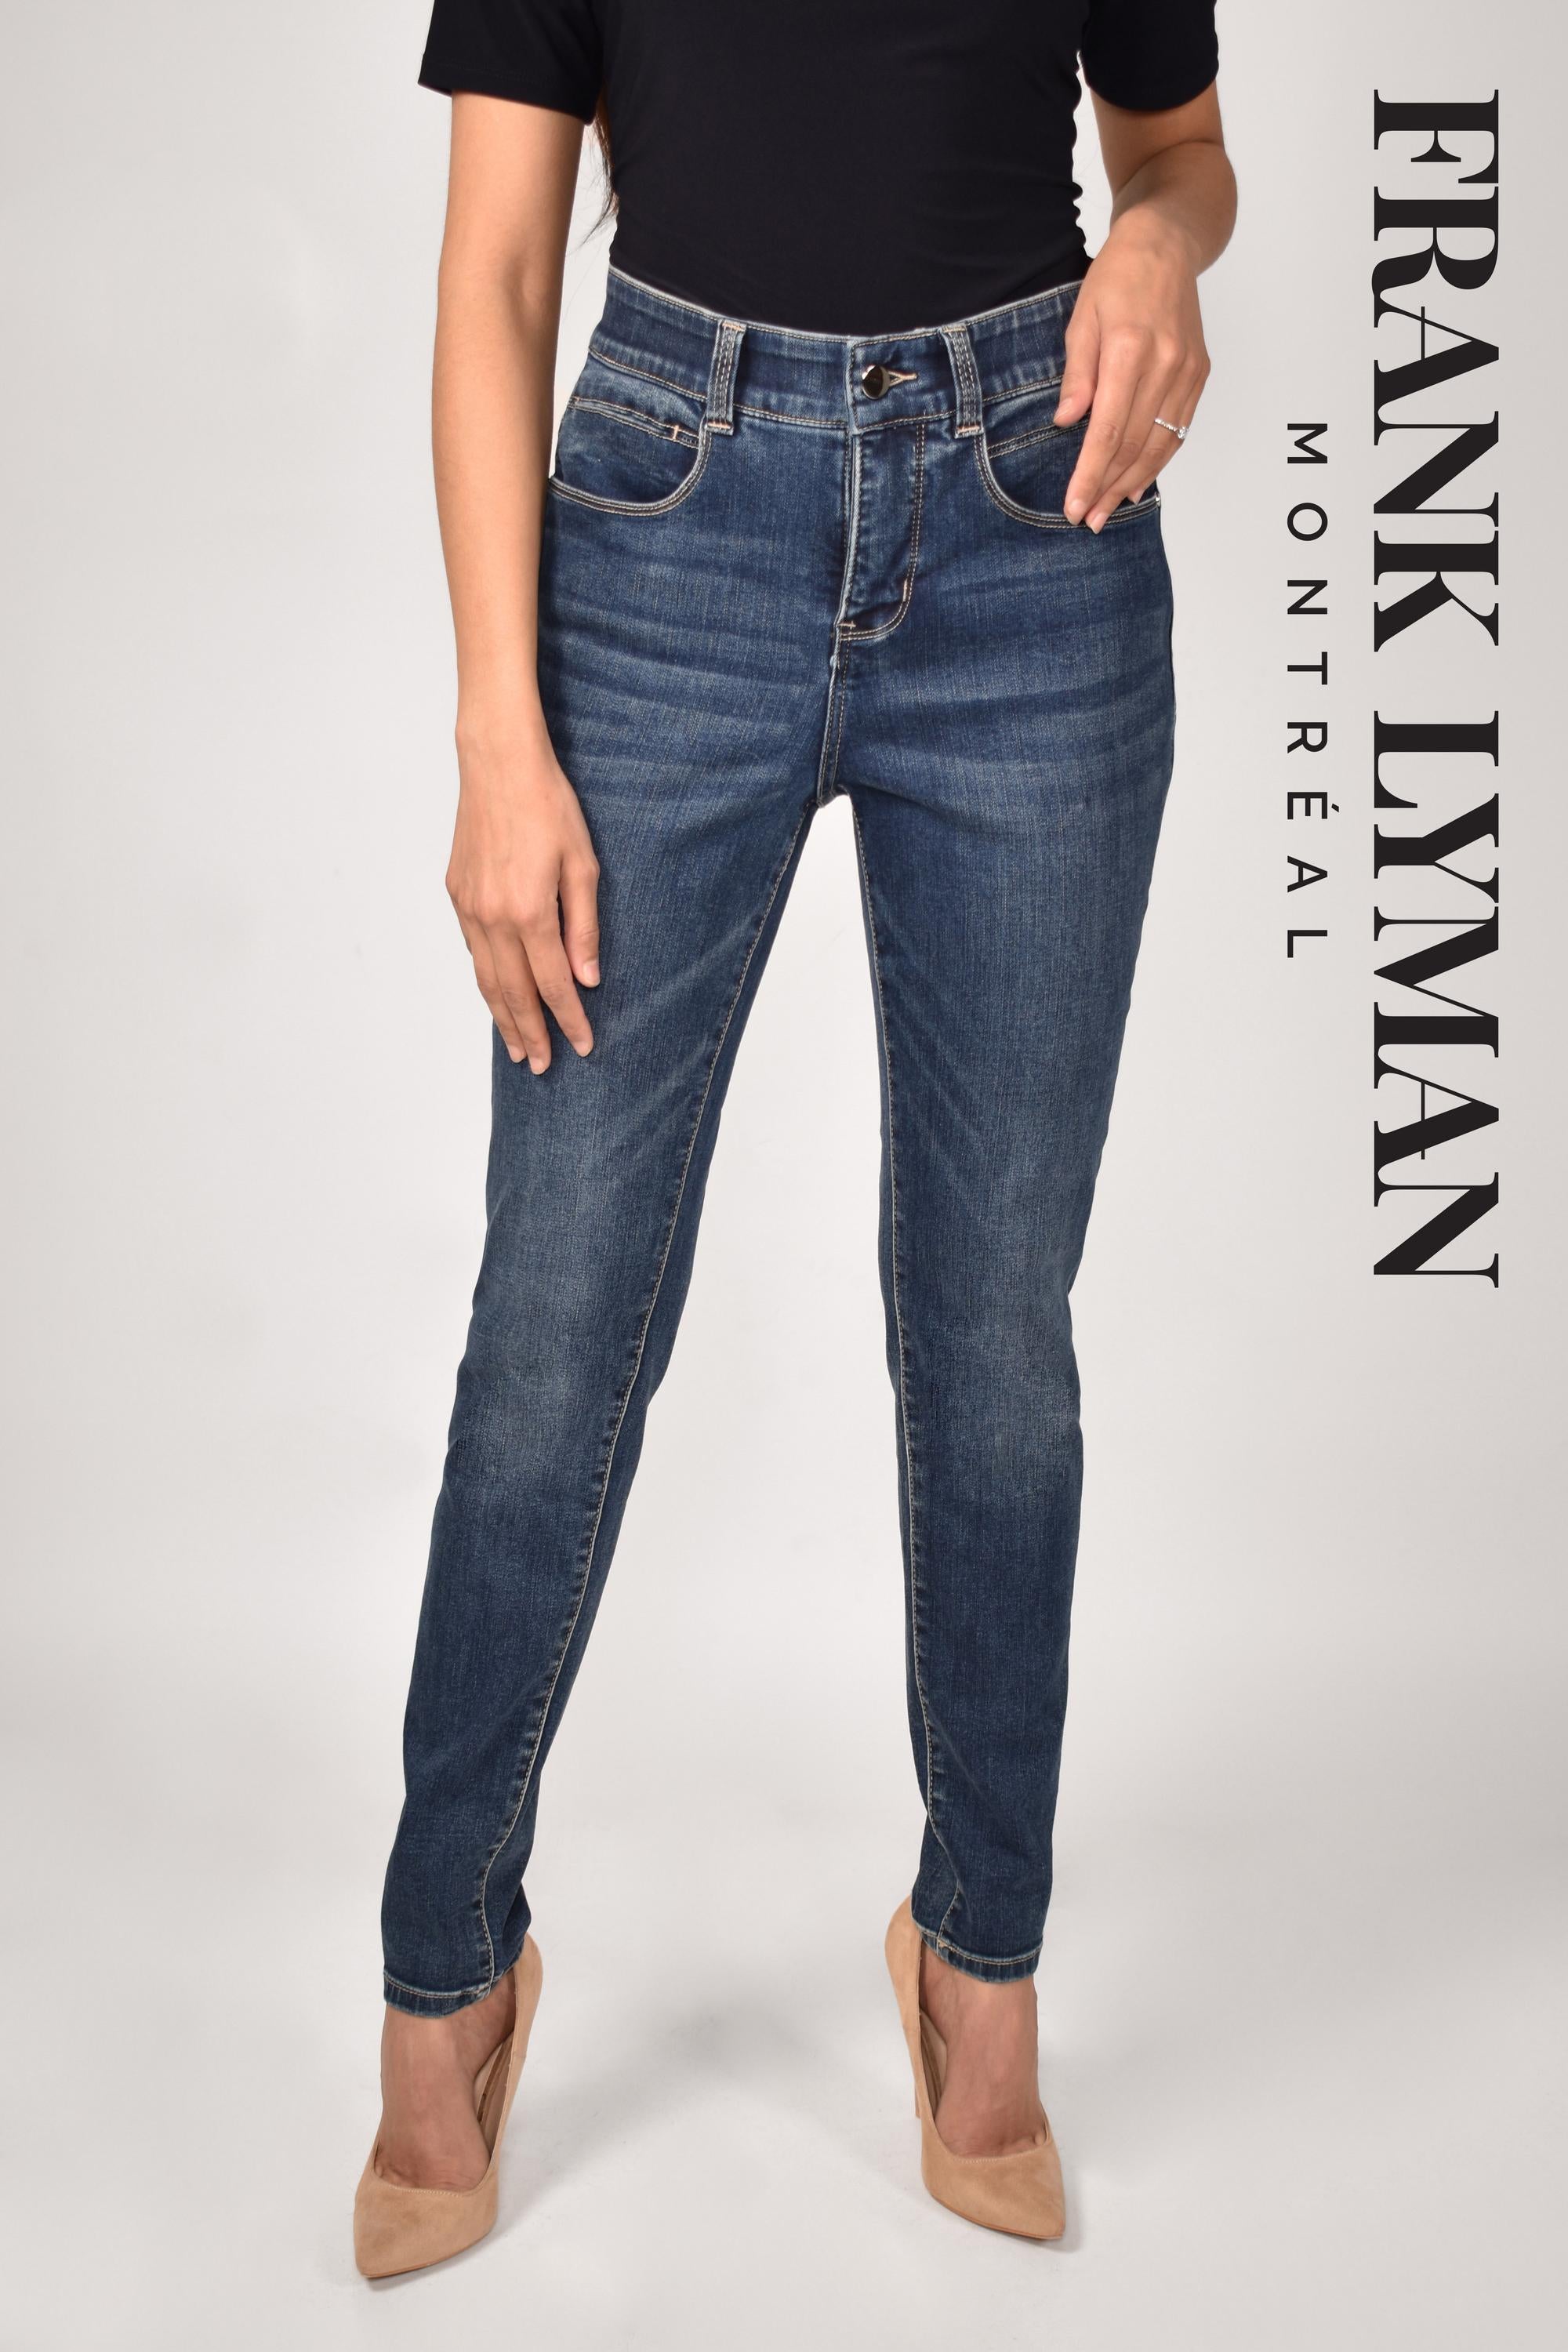 Frank Lyman Frank Lyman Denim Jeans Pant 224507U